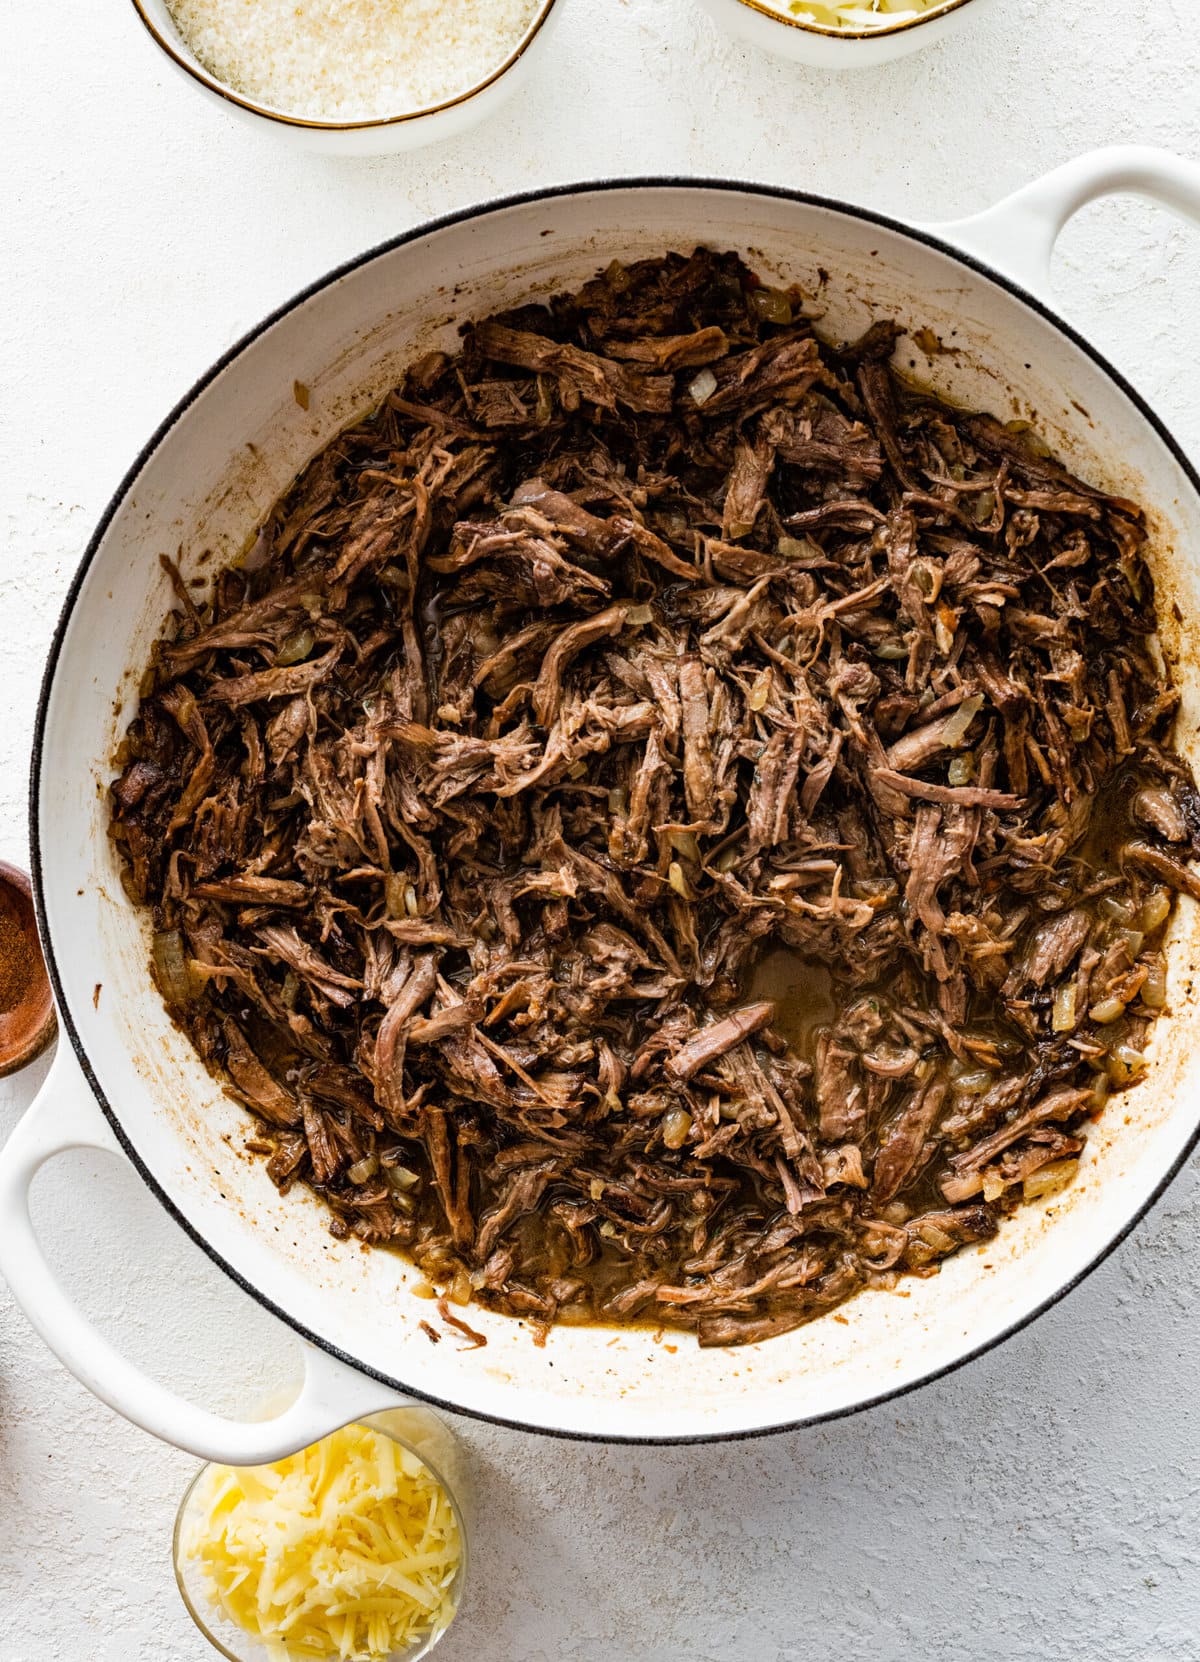 How to make leftover pot roast casserole step-by-step instructions: shred the leftover pot roast.